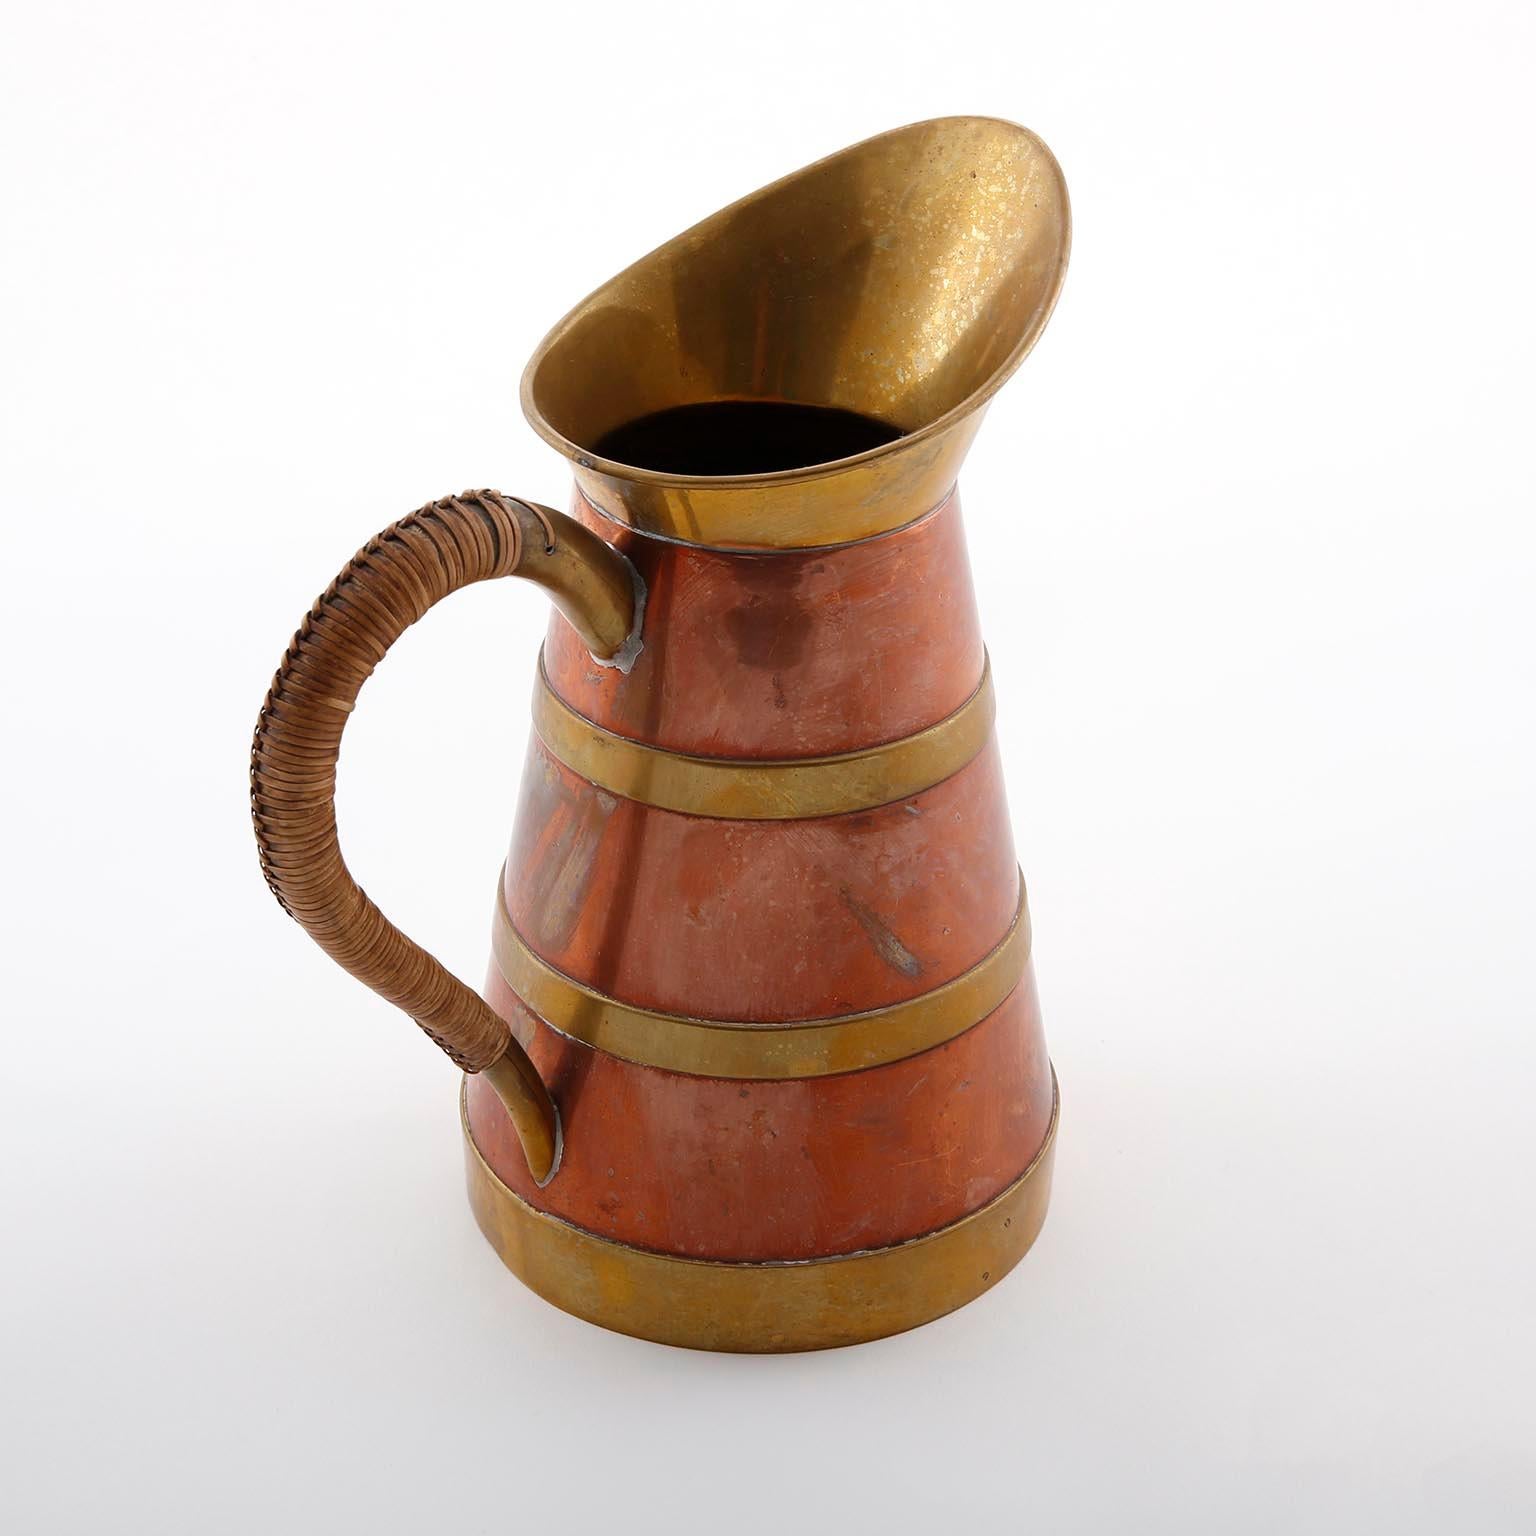 cane pitcher